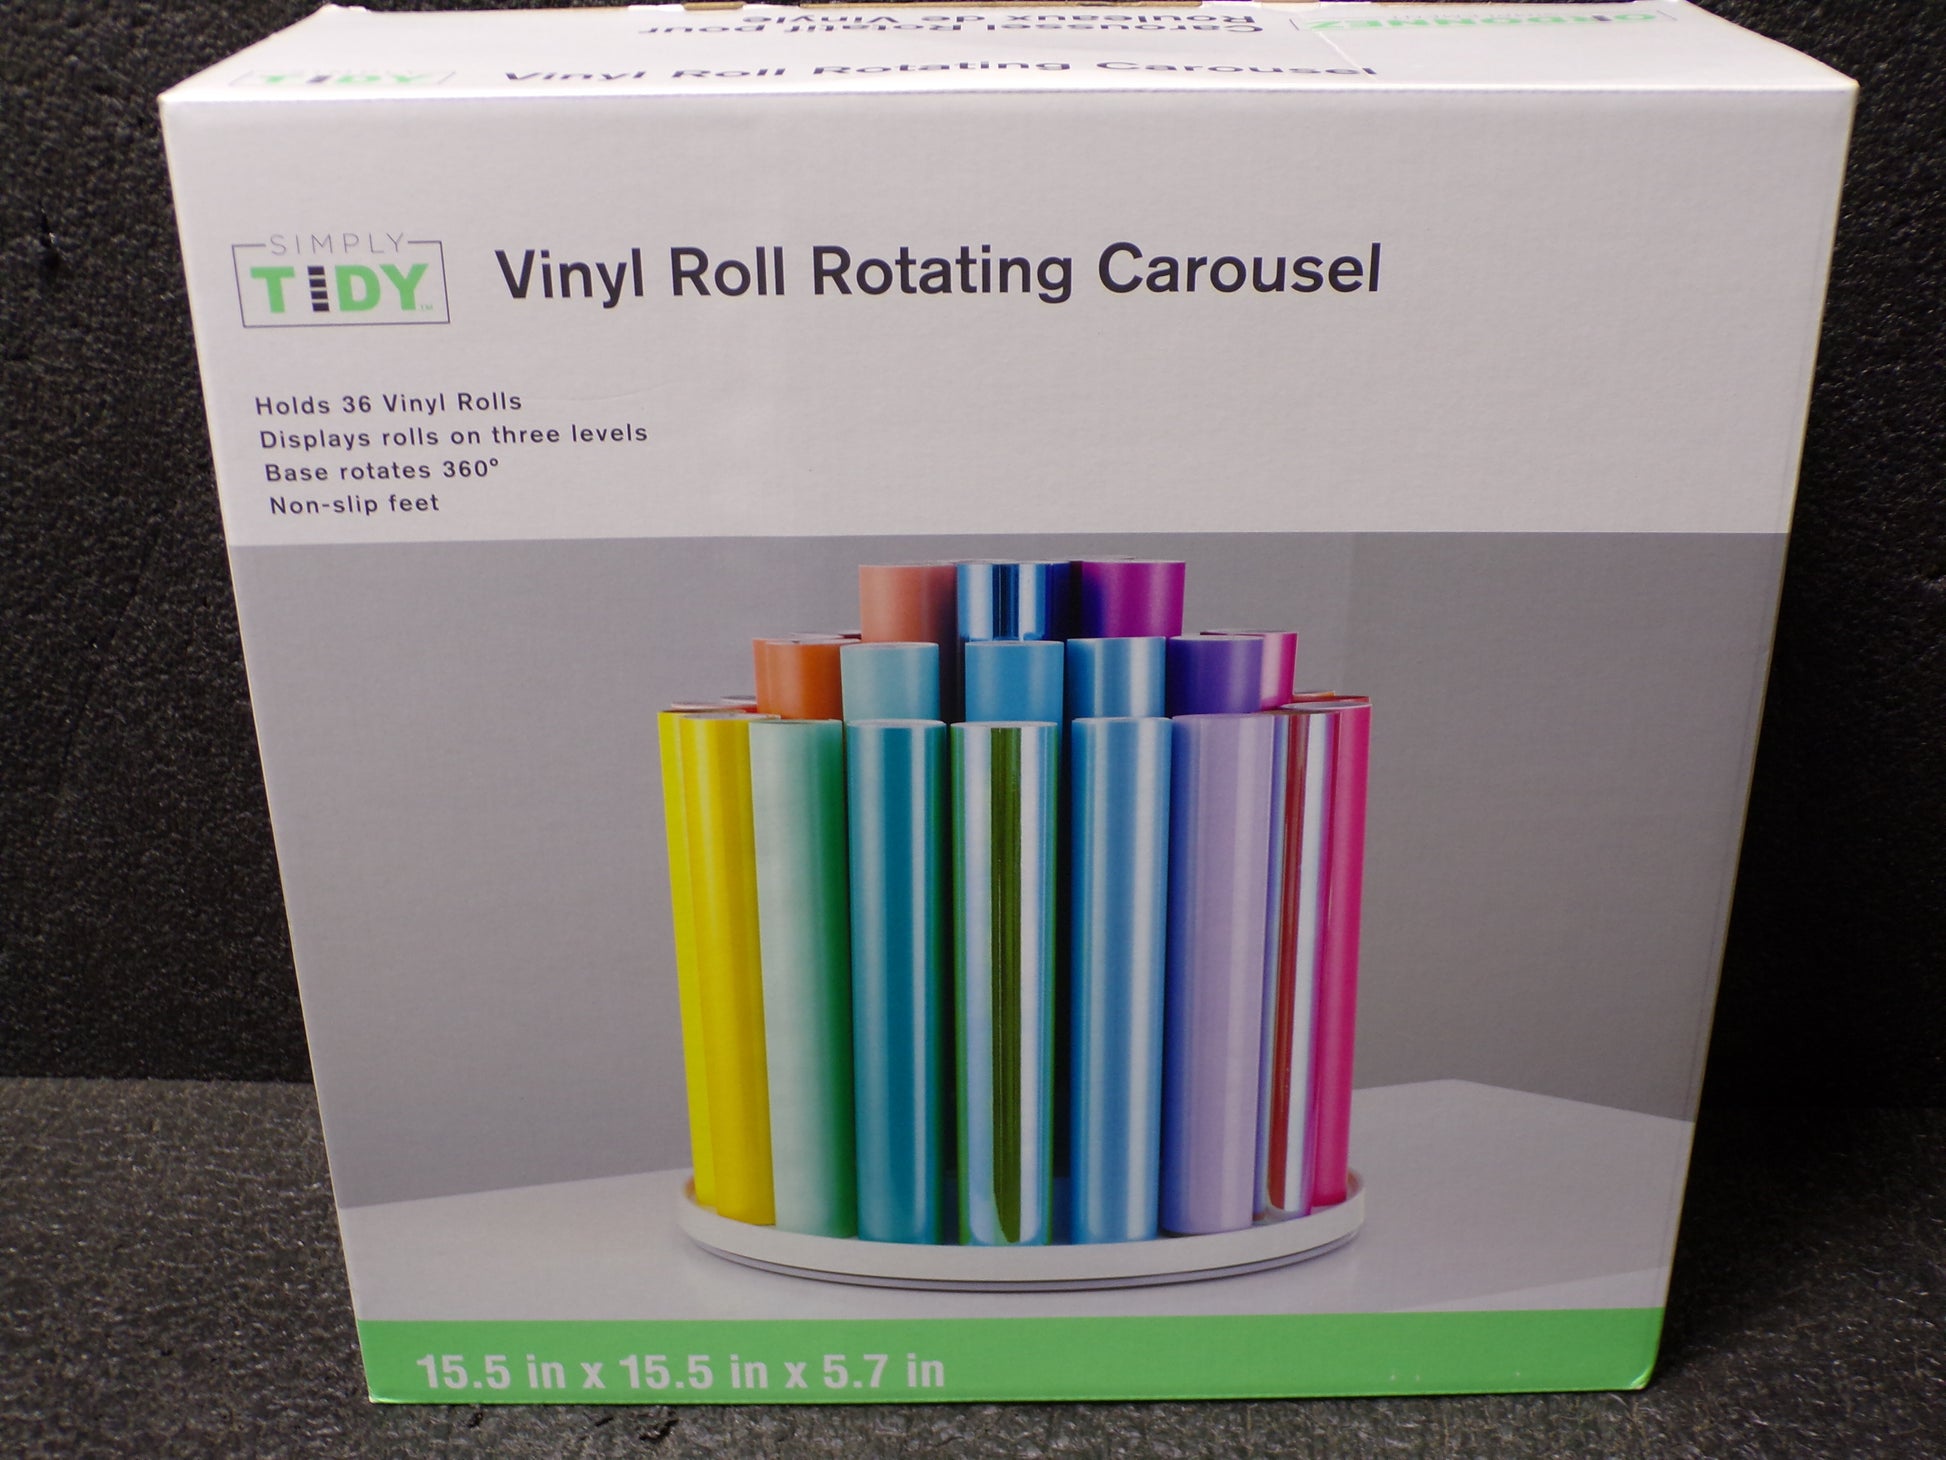 Simply Tidy Vinyl Roll Rotating Carousel (CR00254-BT05